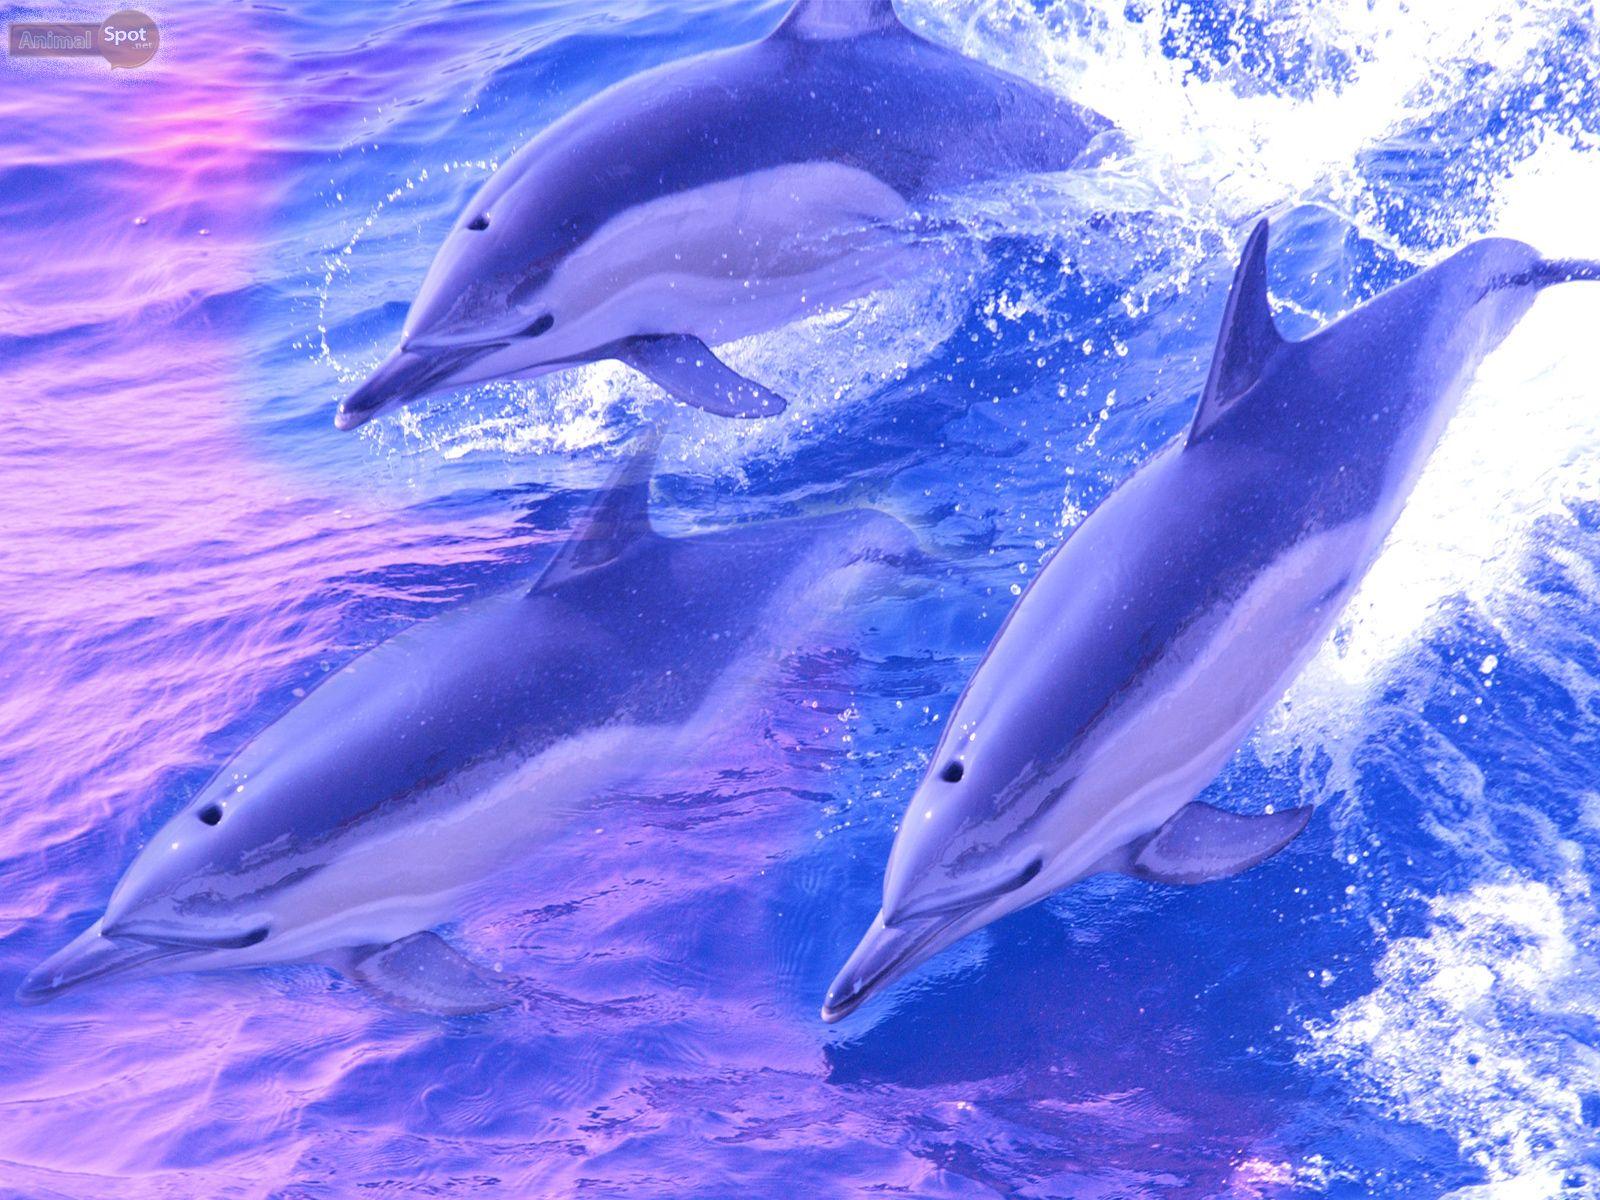 2375 Dolphin Heart Images Stock Photos  Vectors  Shutterstock